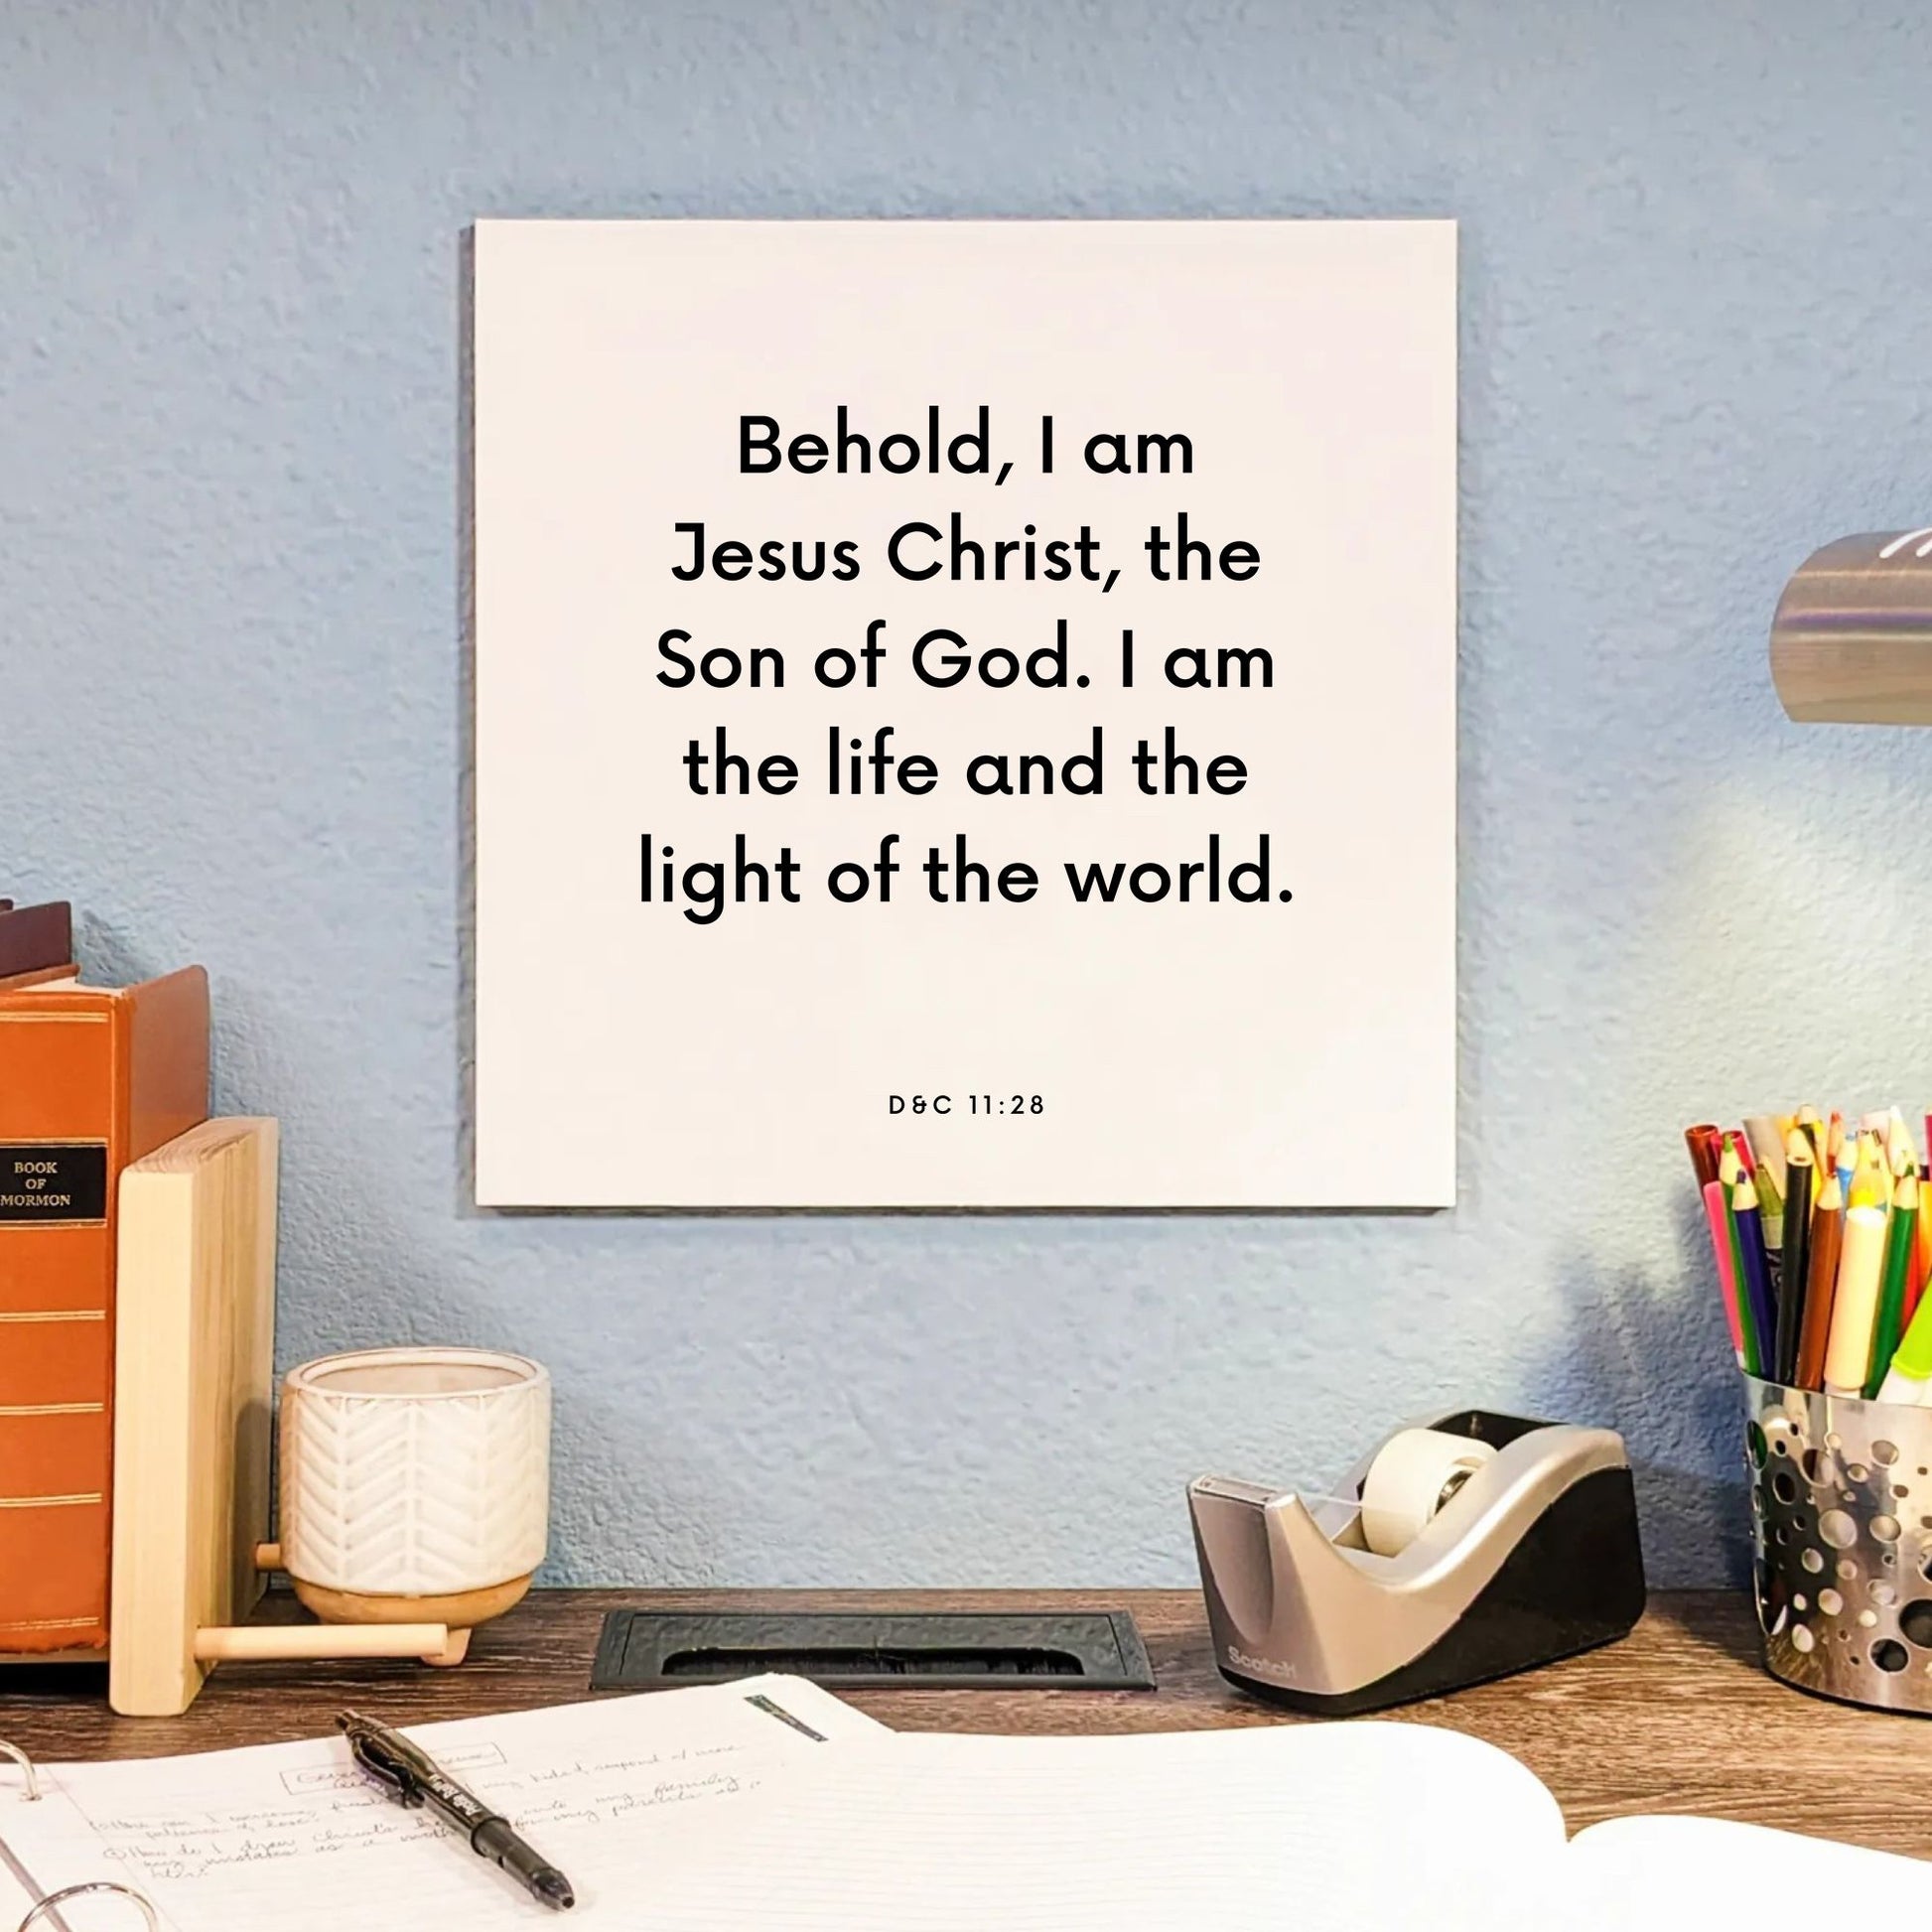 Desk mouting of the scripture tile for D&C 11:28 - "Behold, I am Jesus Christ, the Son of God"